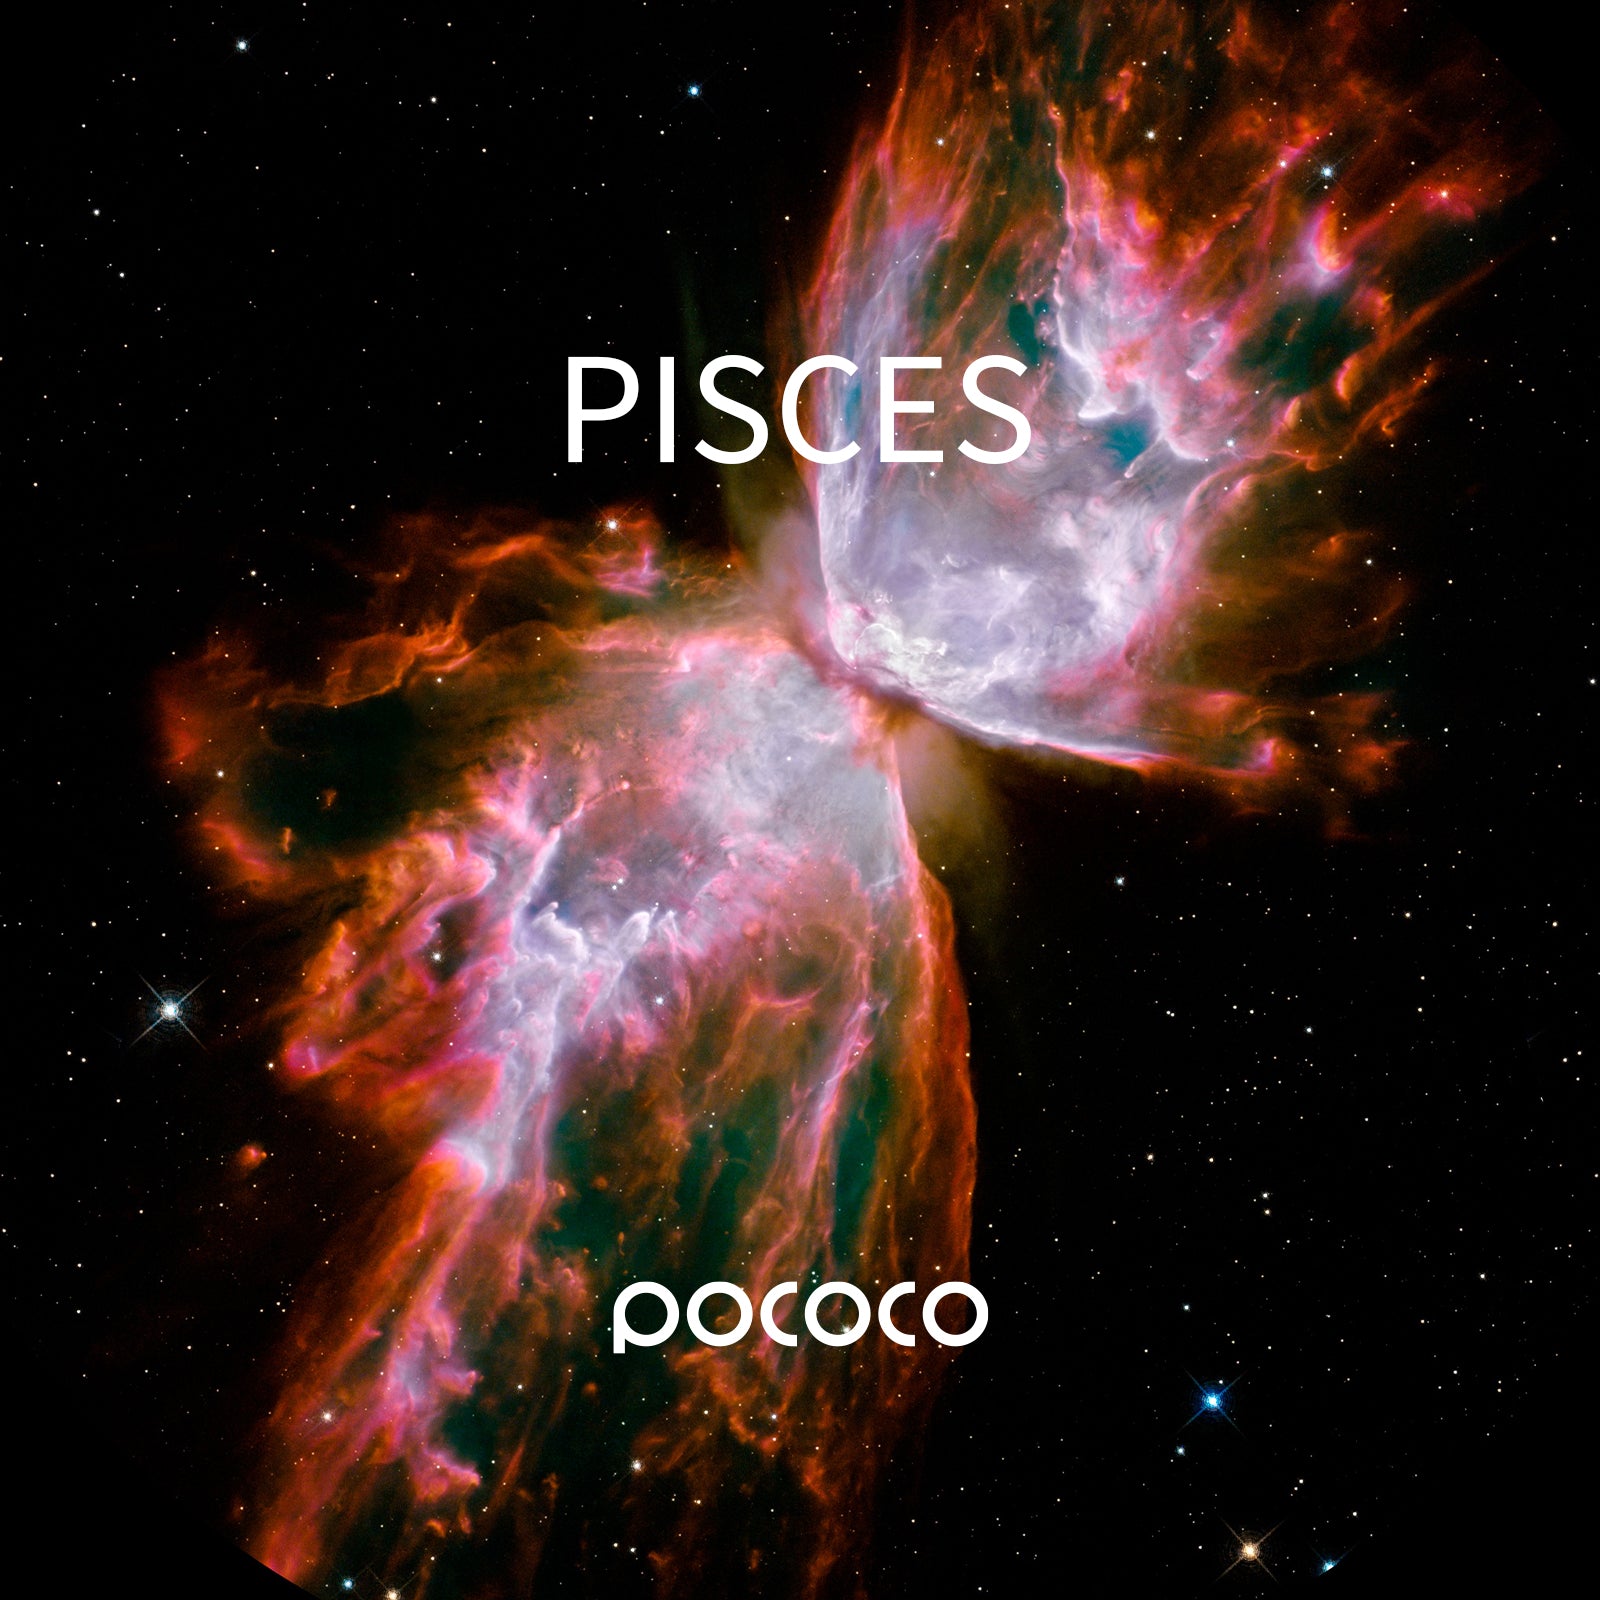 POCOCO Galaxy Projector Disc - Pisces